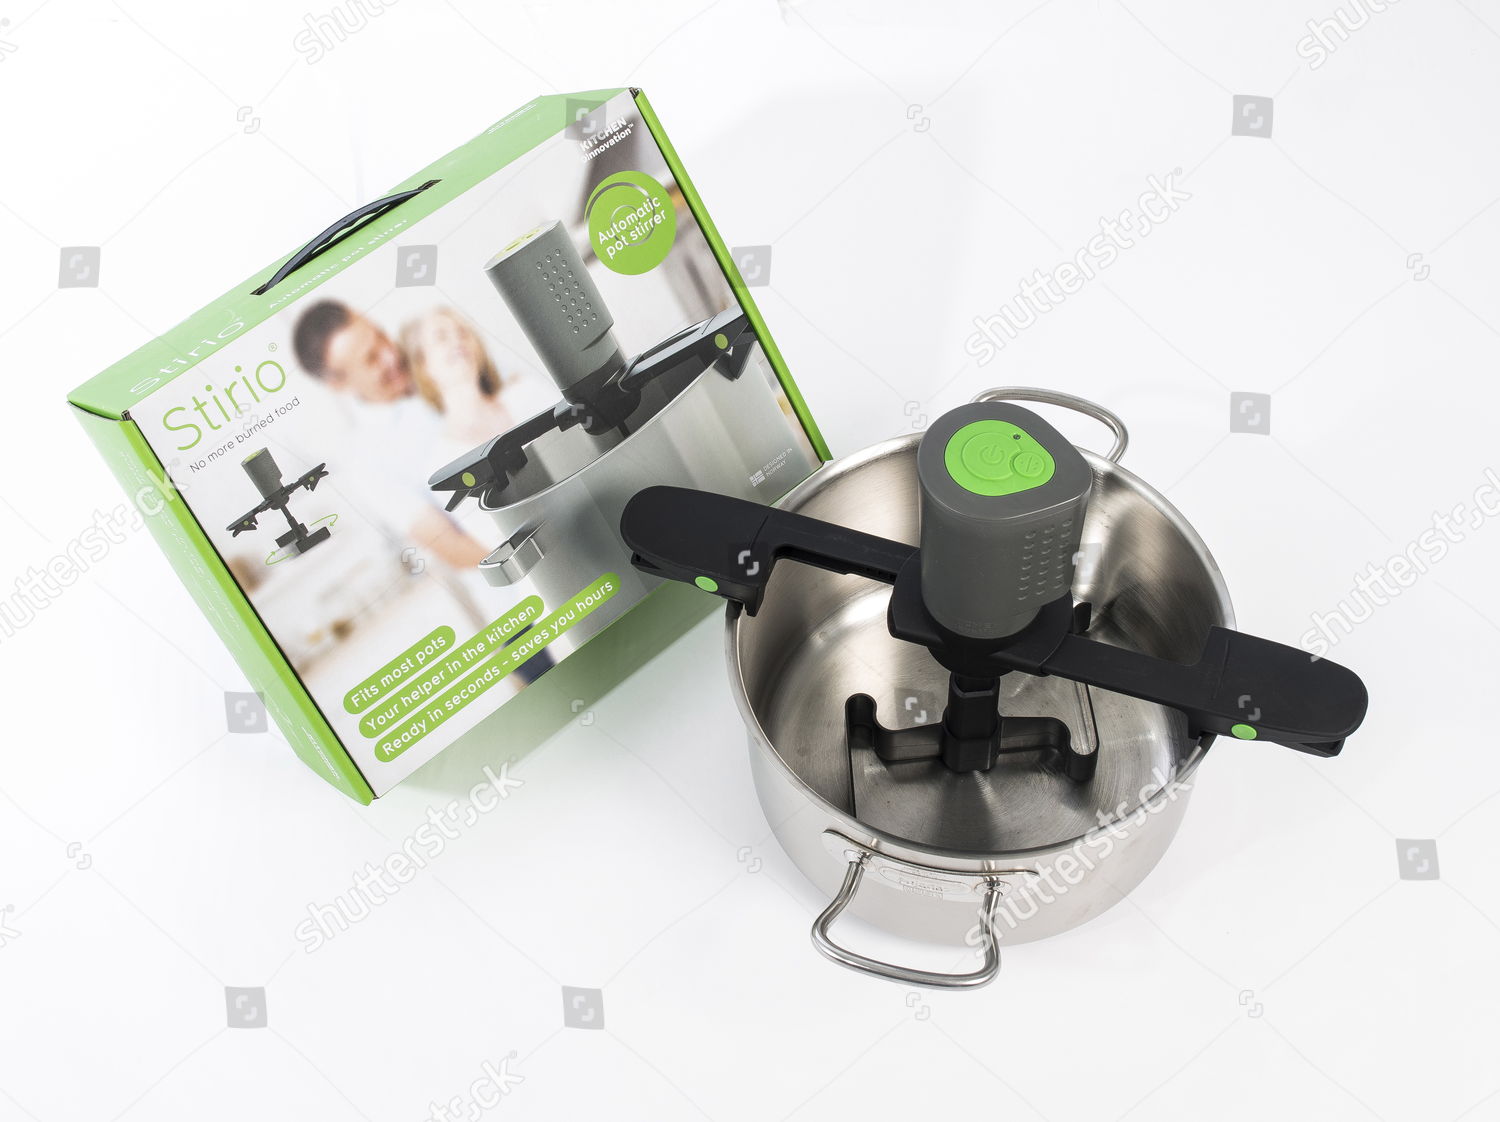 Automatic pot stirrer - photo and patent 